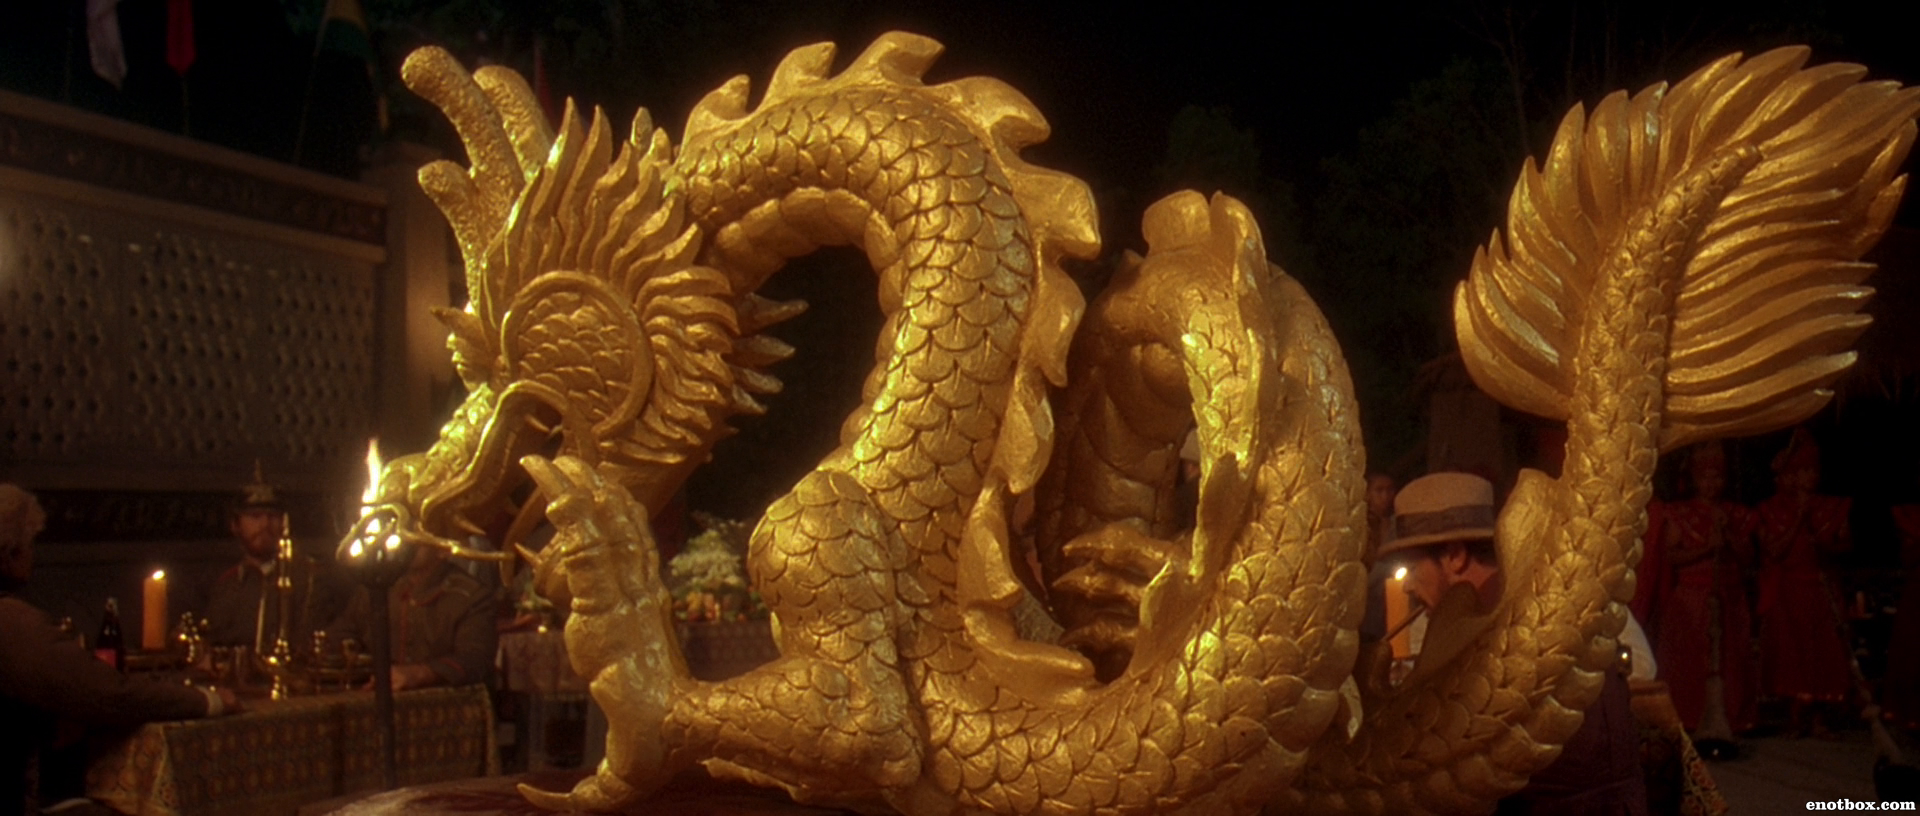 Включи золотой дракон. Ван Дамм золотой дракон. В поисках приключений золотой дракон.